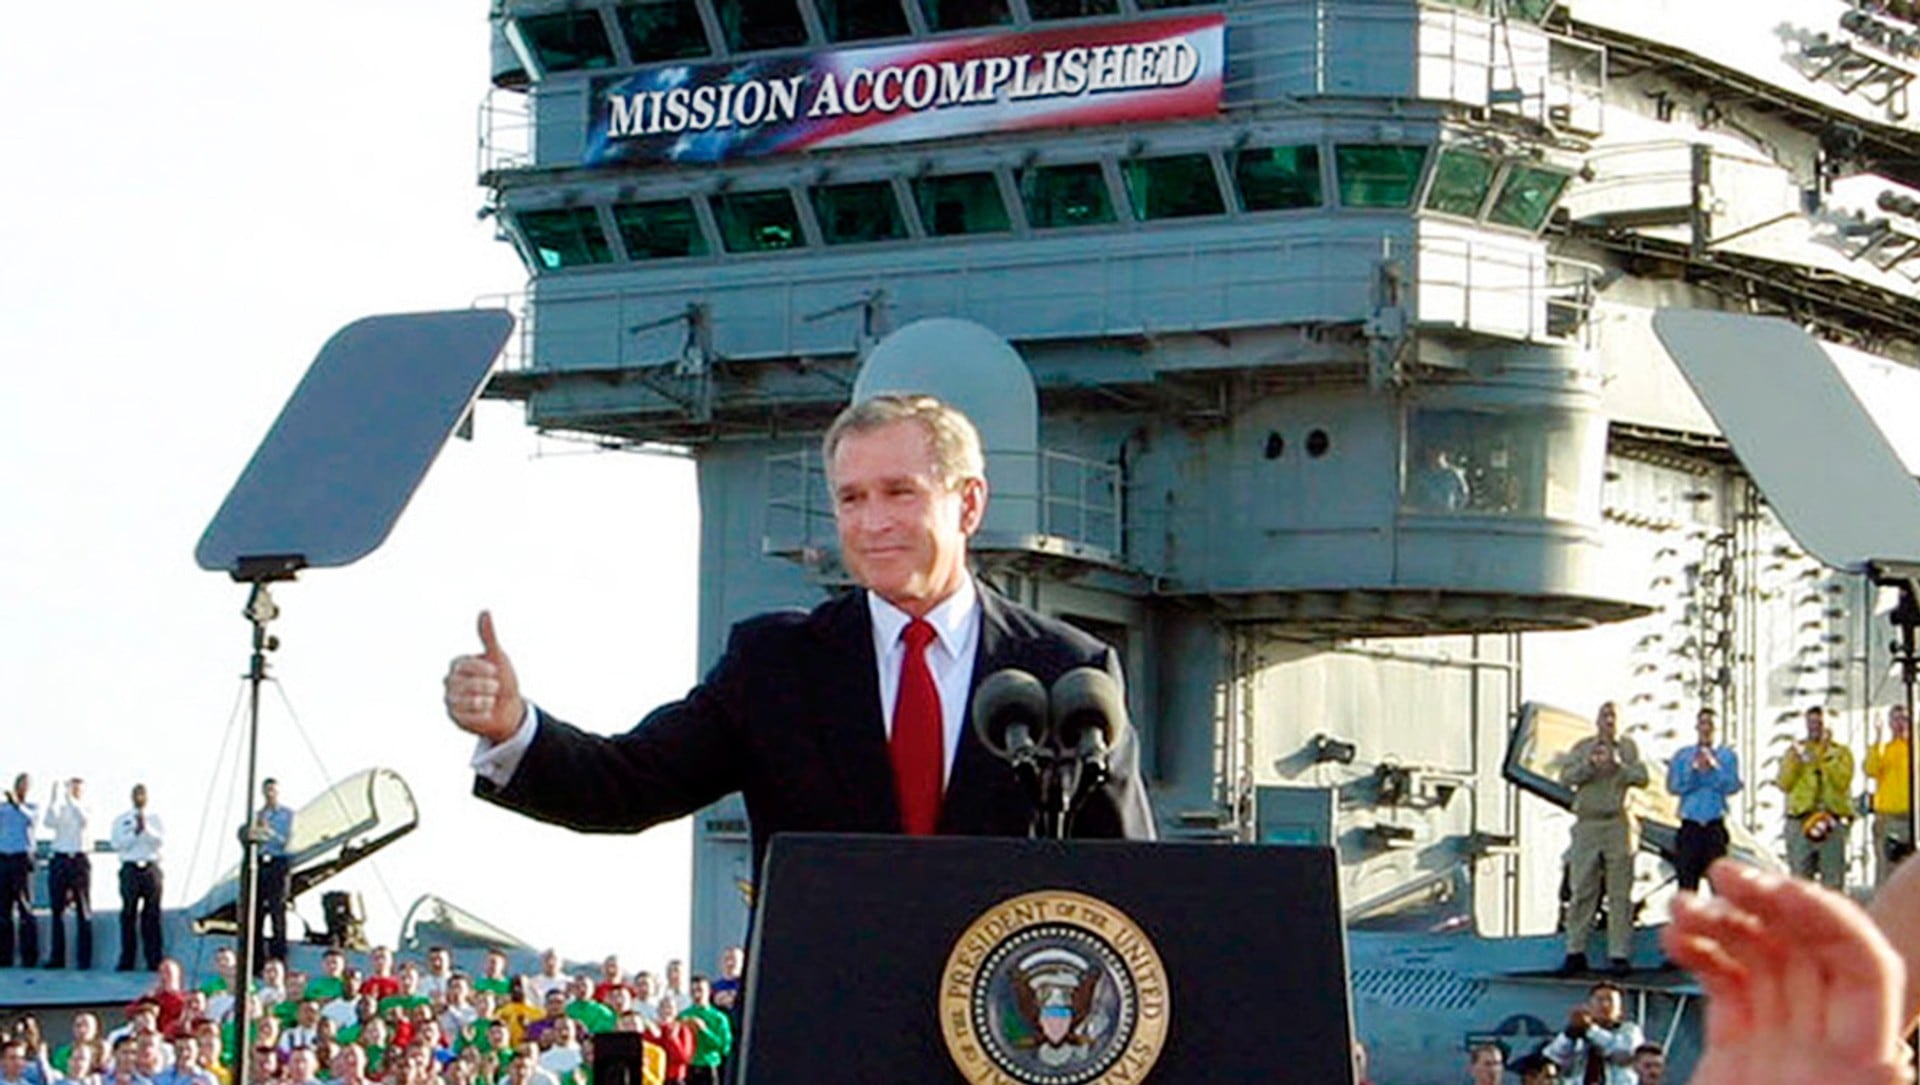 W. Bush Mission NRK